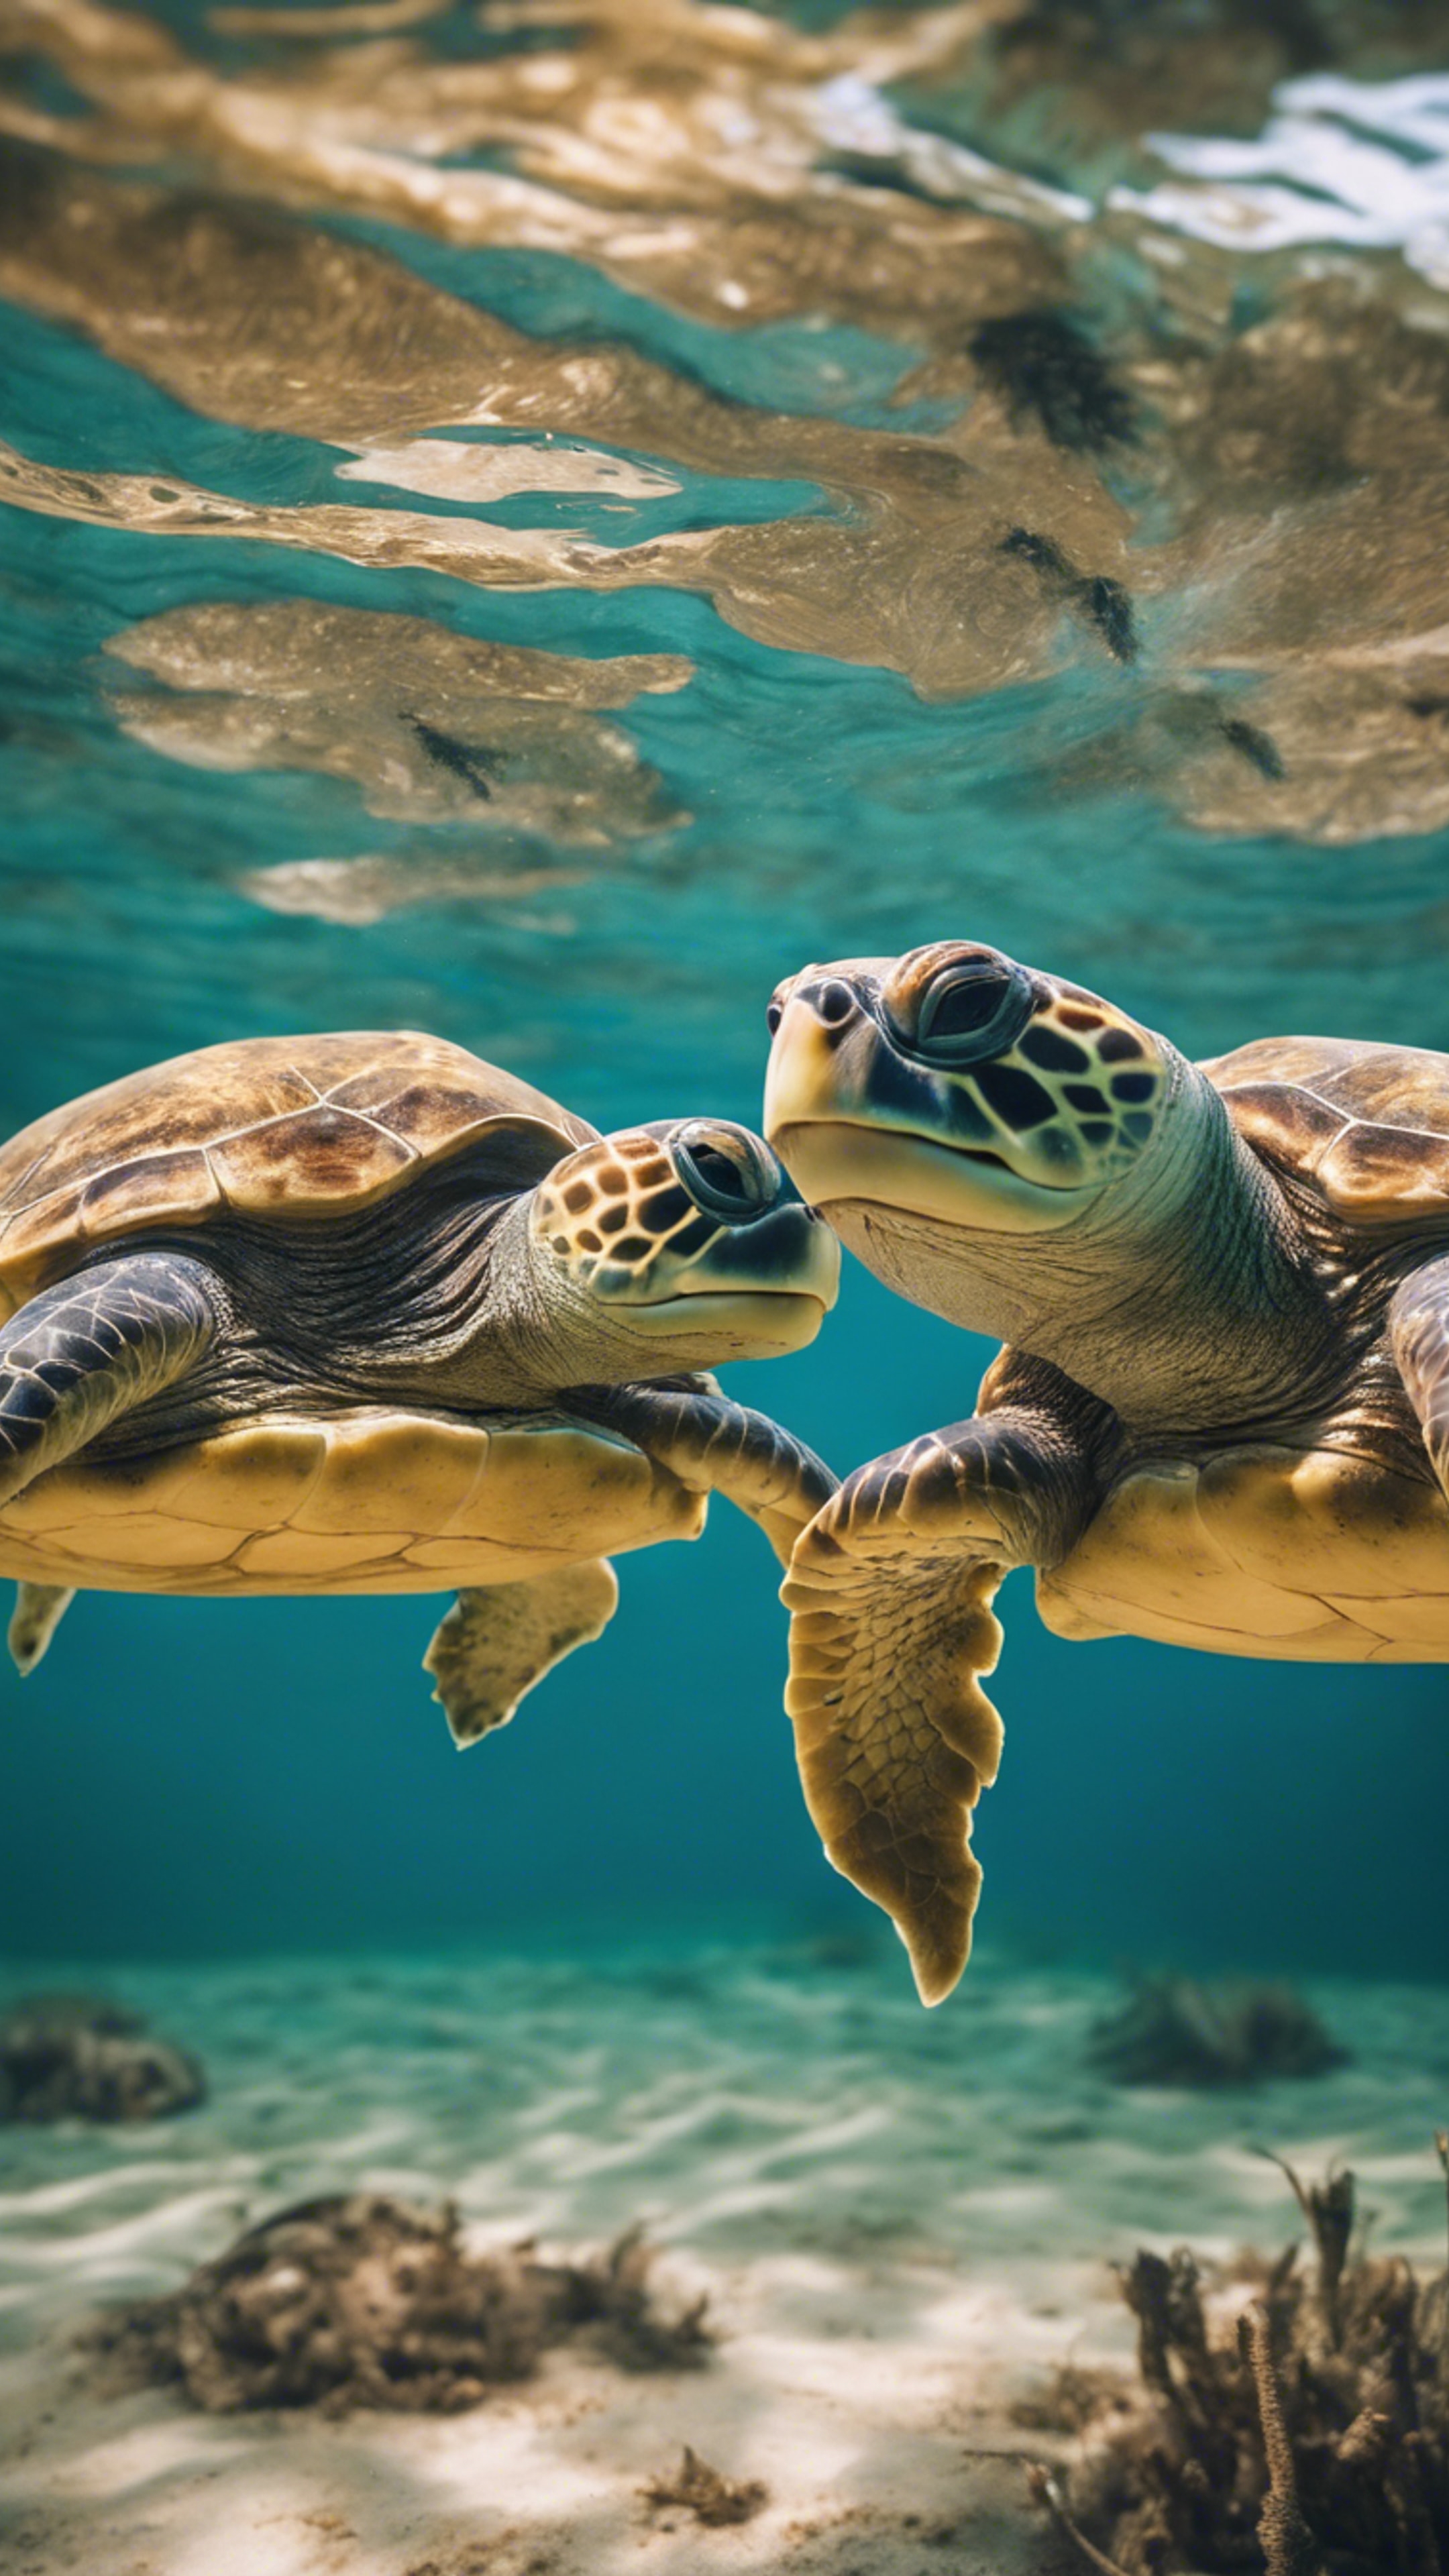 A pair of teenage loggerhead turtles leisurely swimming in warm, tropical waters. Hintergrund[37e75d6fad0949b8b9fd]